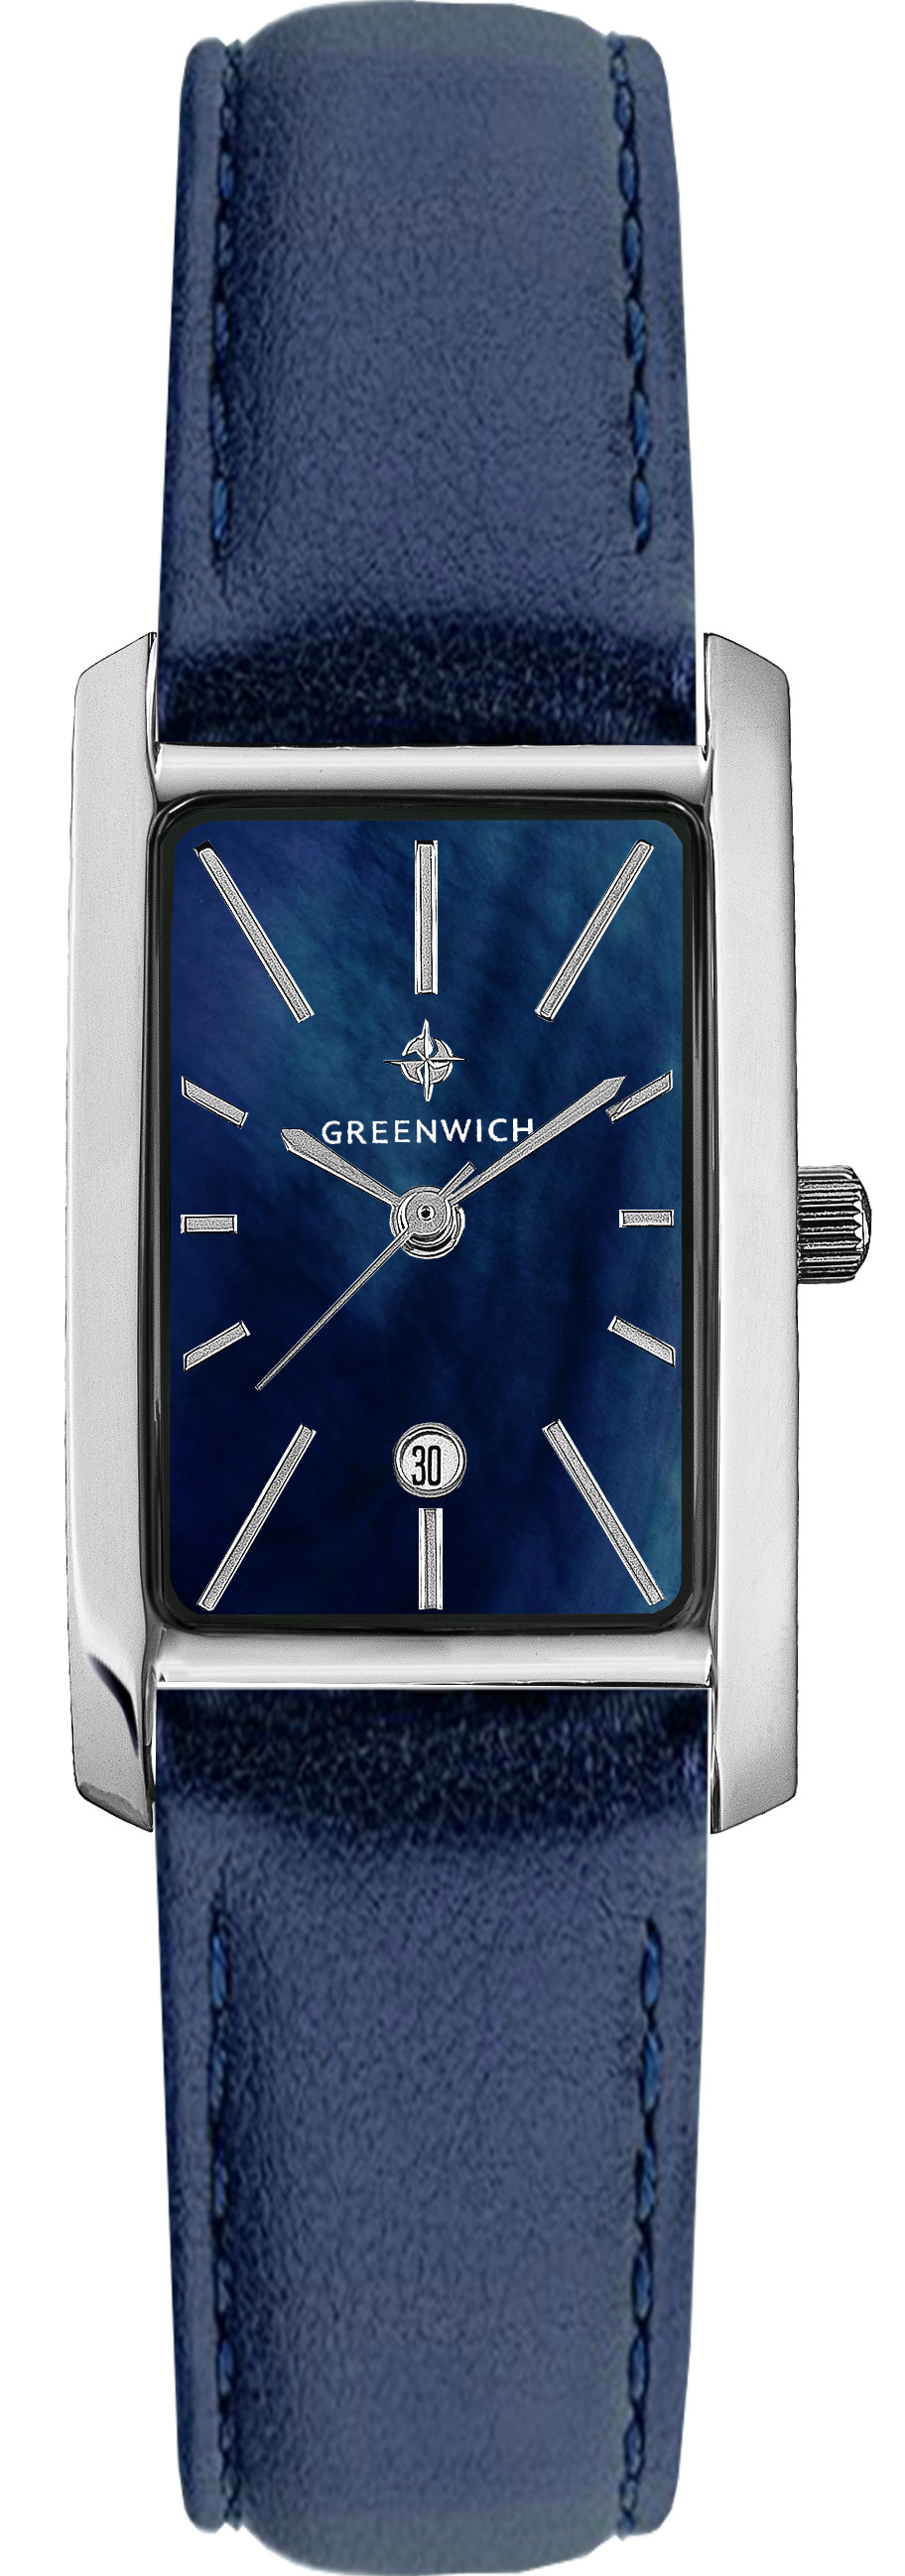 GW 511.11.16, женские часы Greenwich Vesta